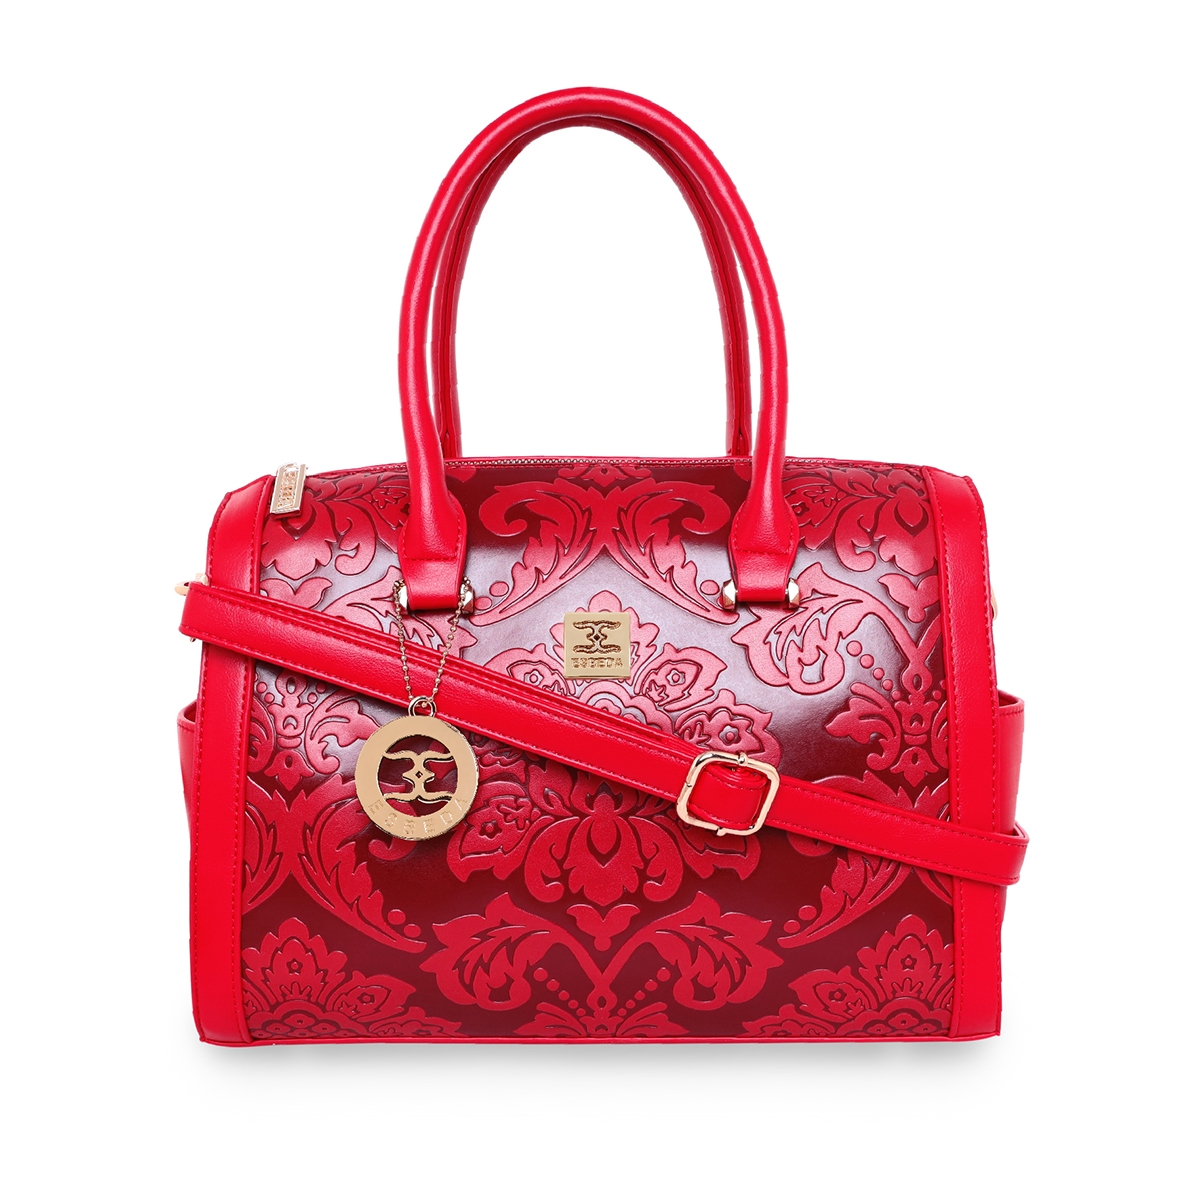 ESBEDA | Women's Red PU Printed Handbags 0